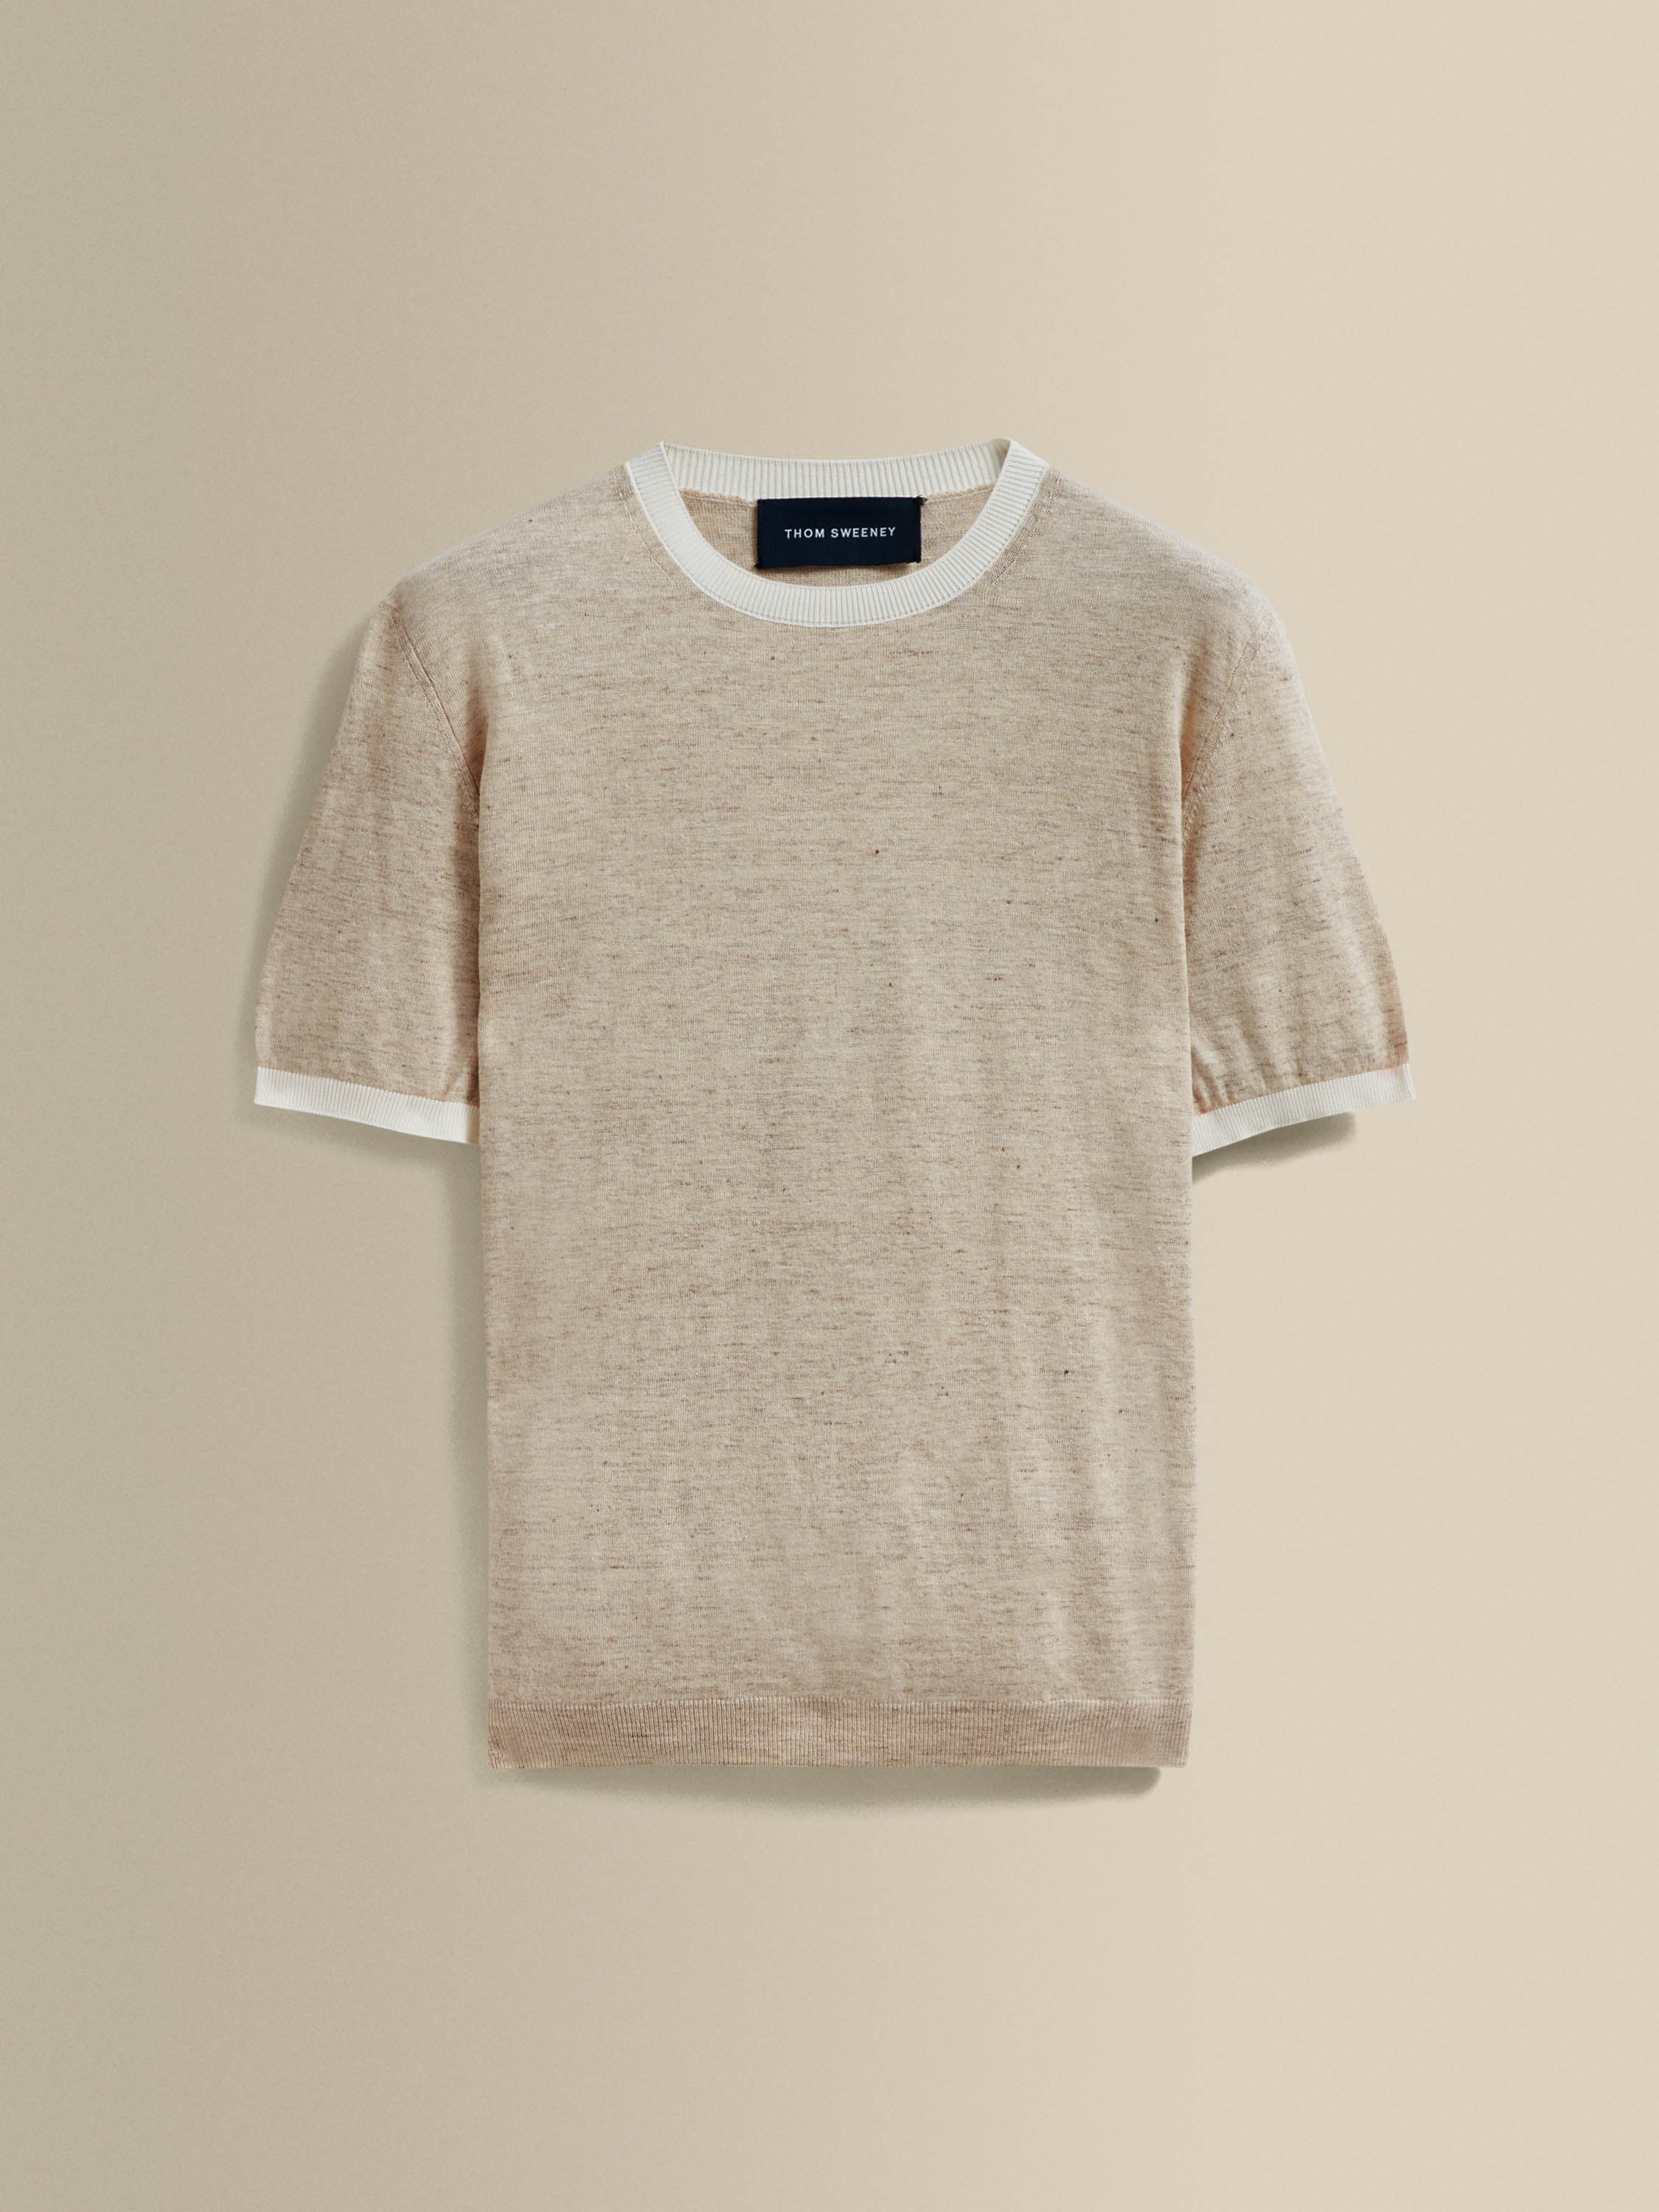 Linen Cotton Contrast Rib T-Shirt Sand White Product Image